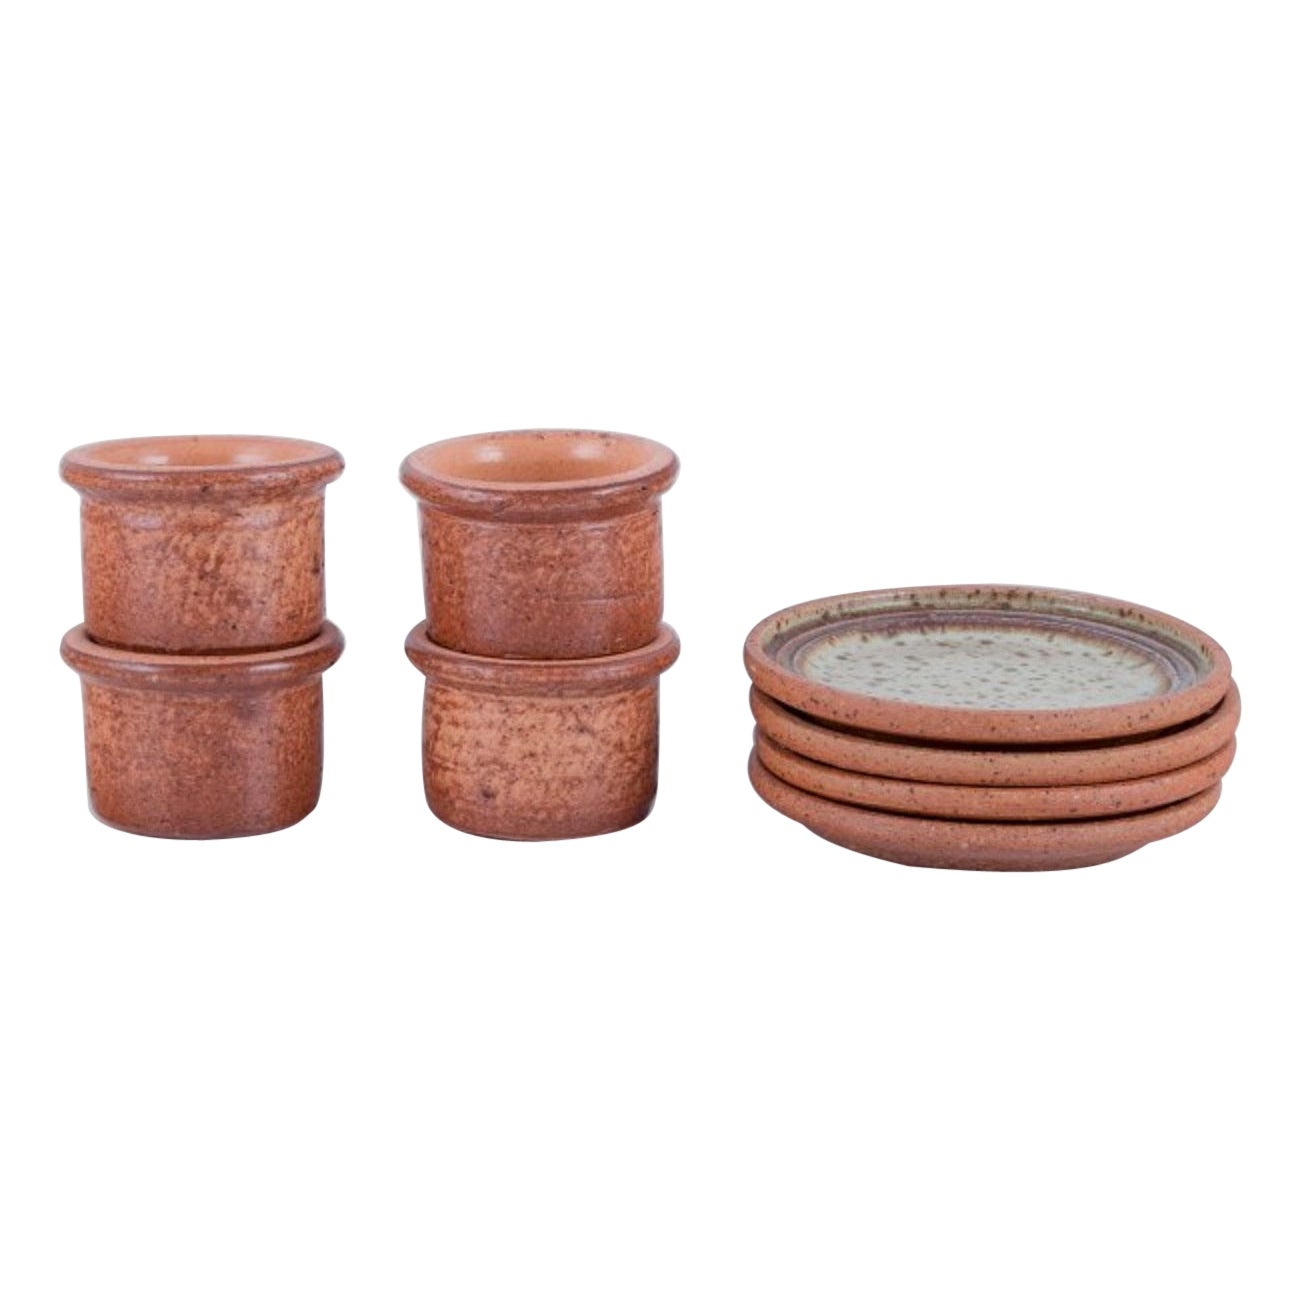 Stouby Keramik. Set of four small handmade ceramic vases and four plates